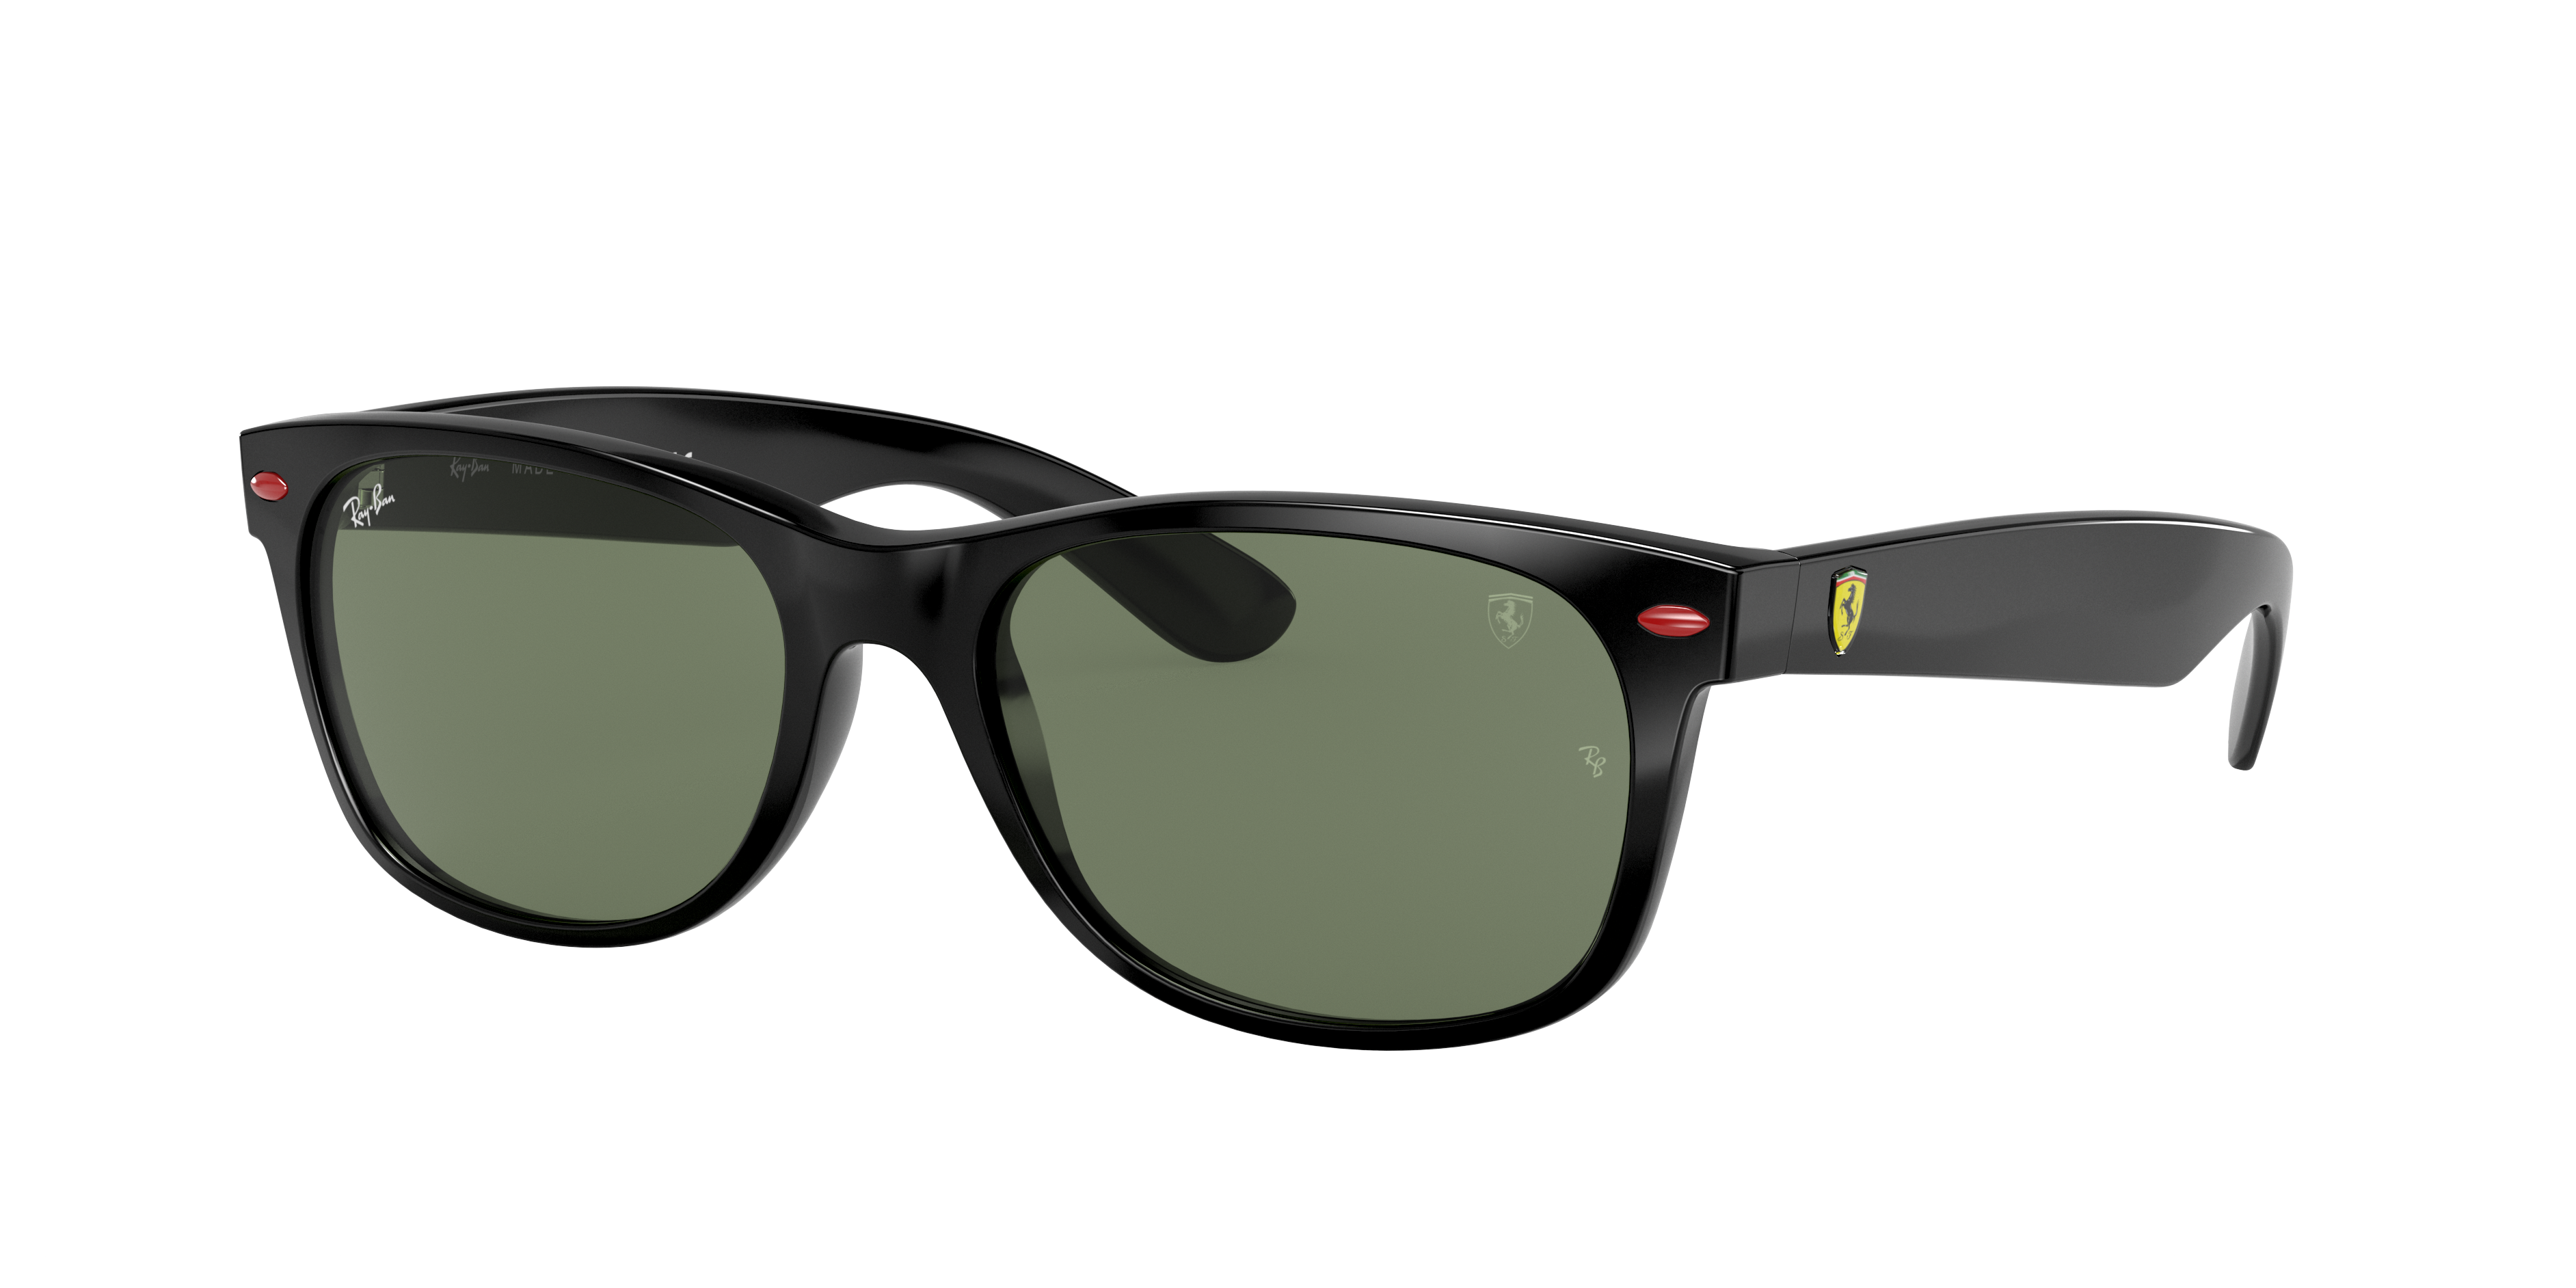 Rb2132m Scuderia Ferrari Collection Sunglasses in Black and Green | Ray-Ban®